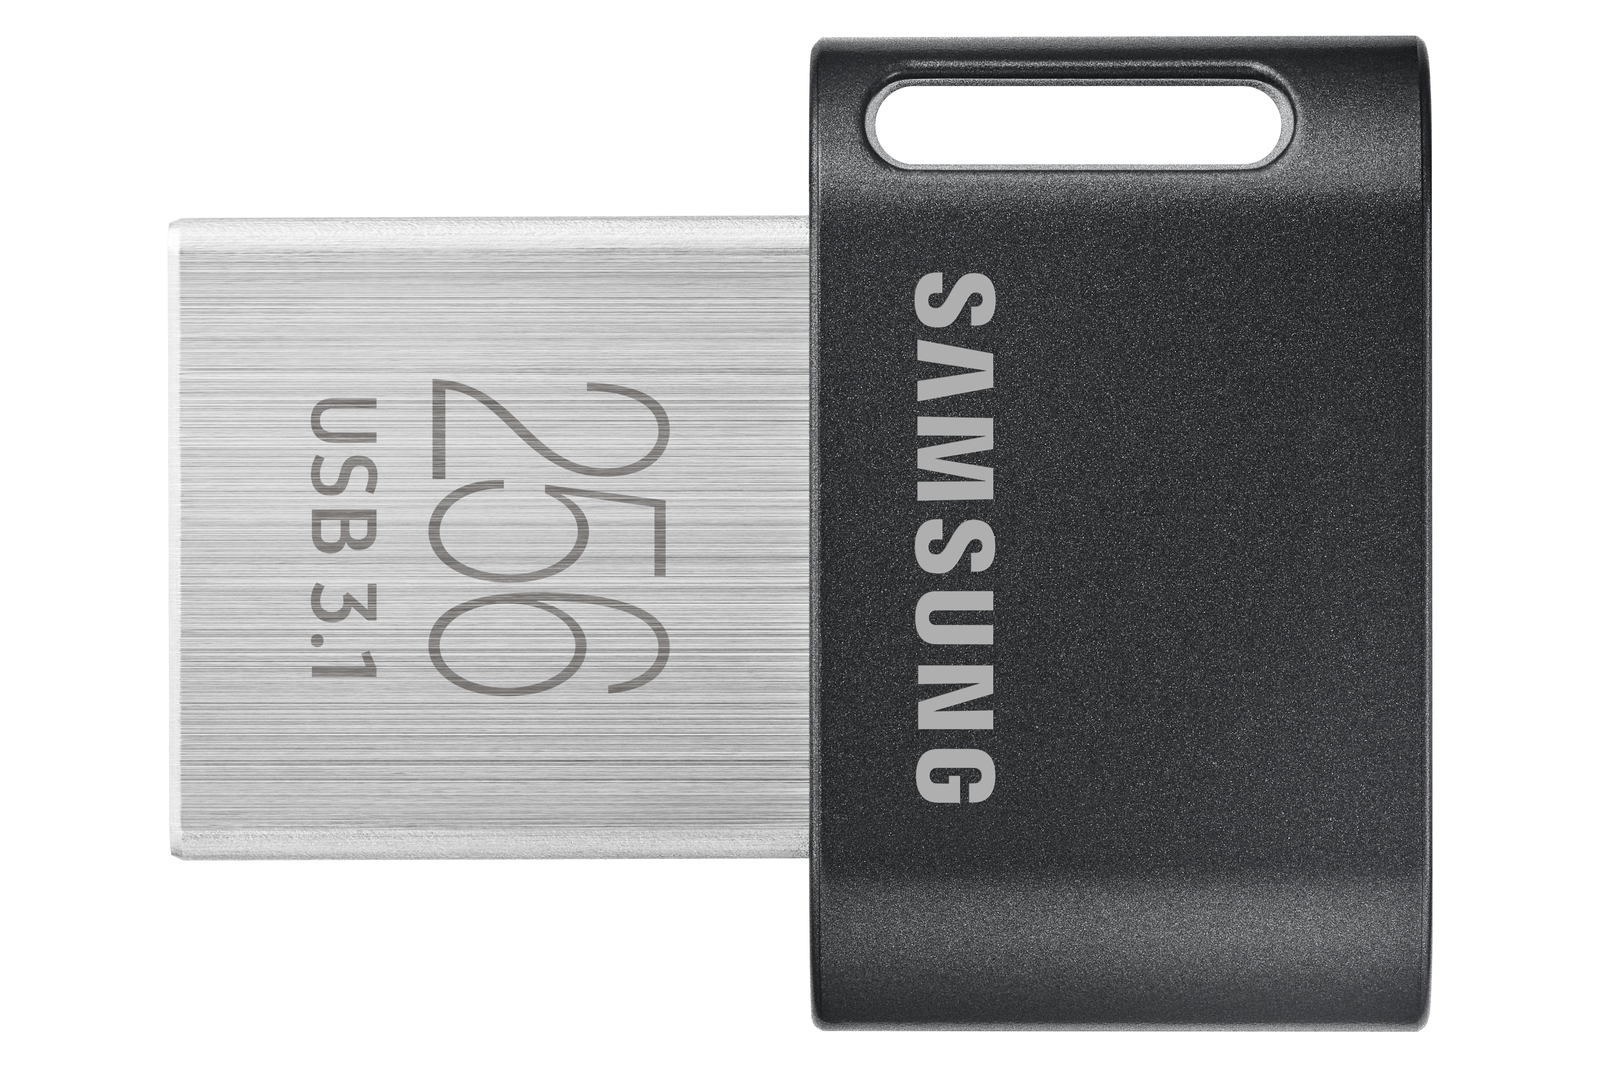 By law etc caravan USB 3.1 Flash Drive FIT Plus 256GB Memory & Storage - MUF-256AB/AM |  Samsung US